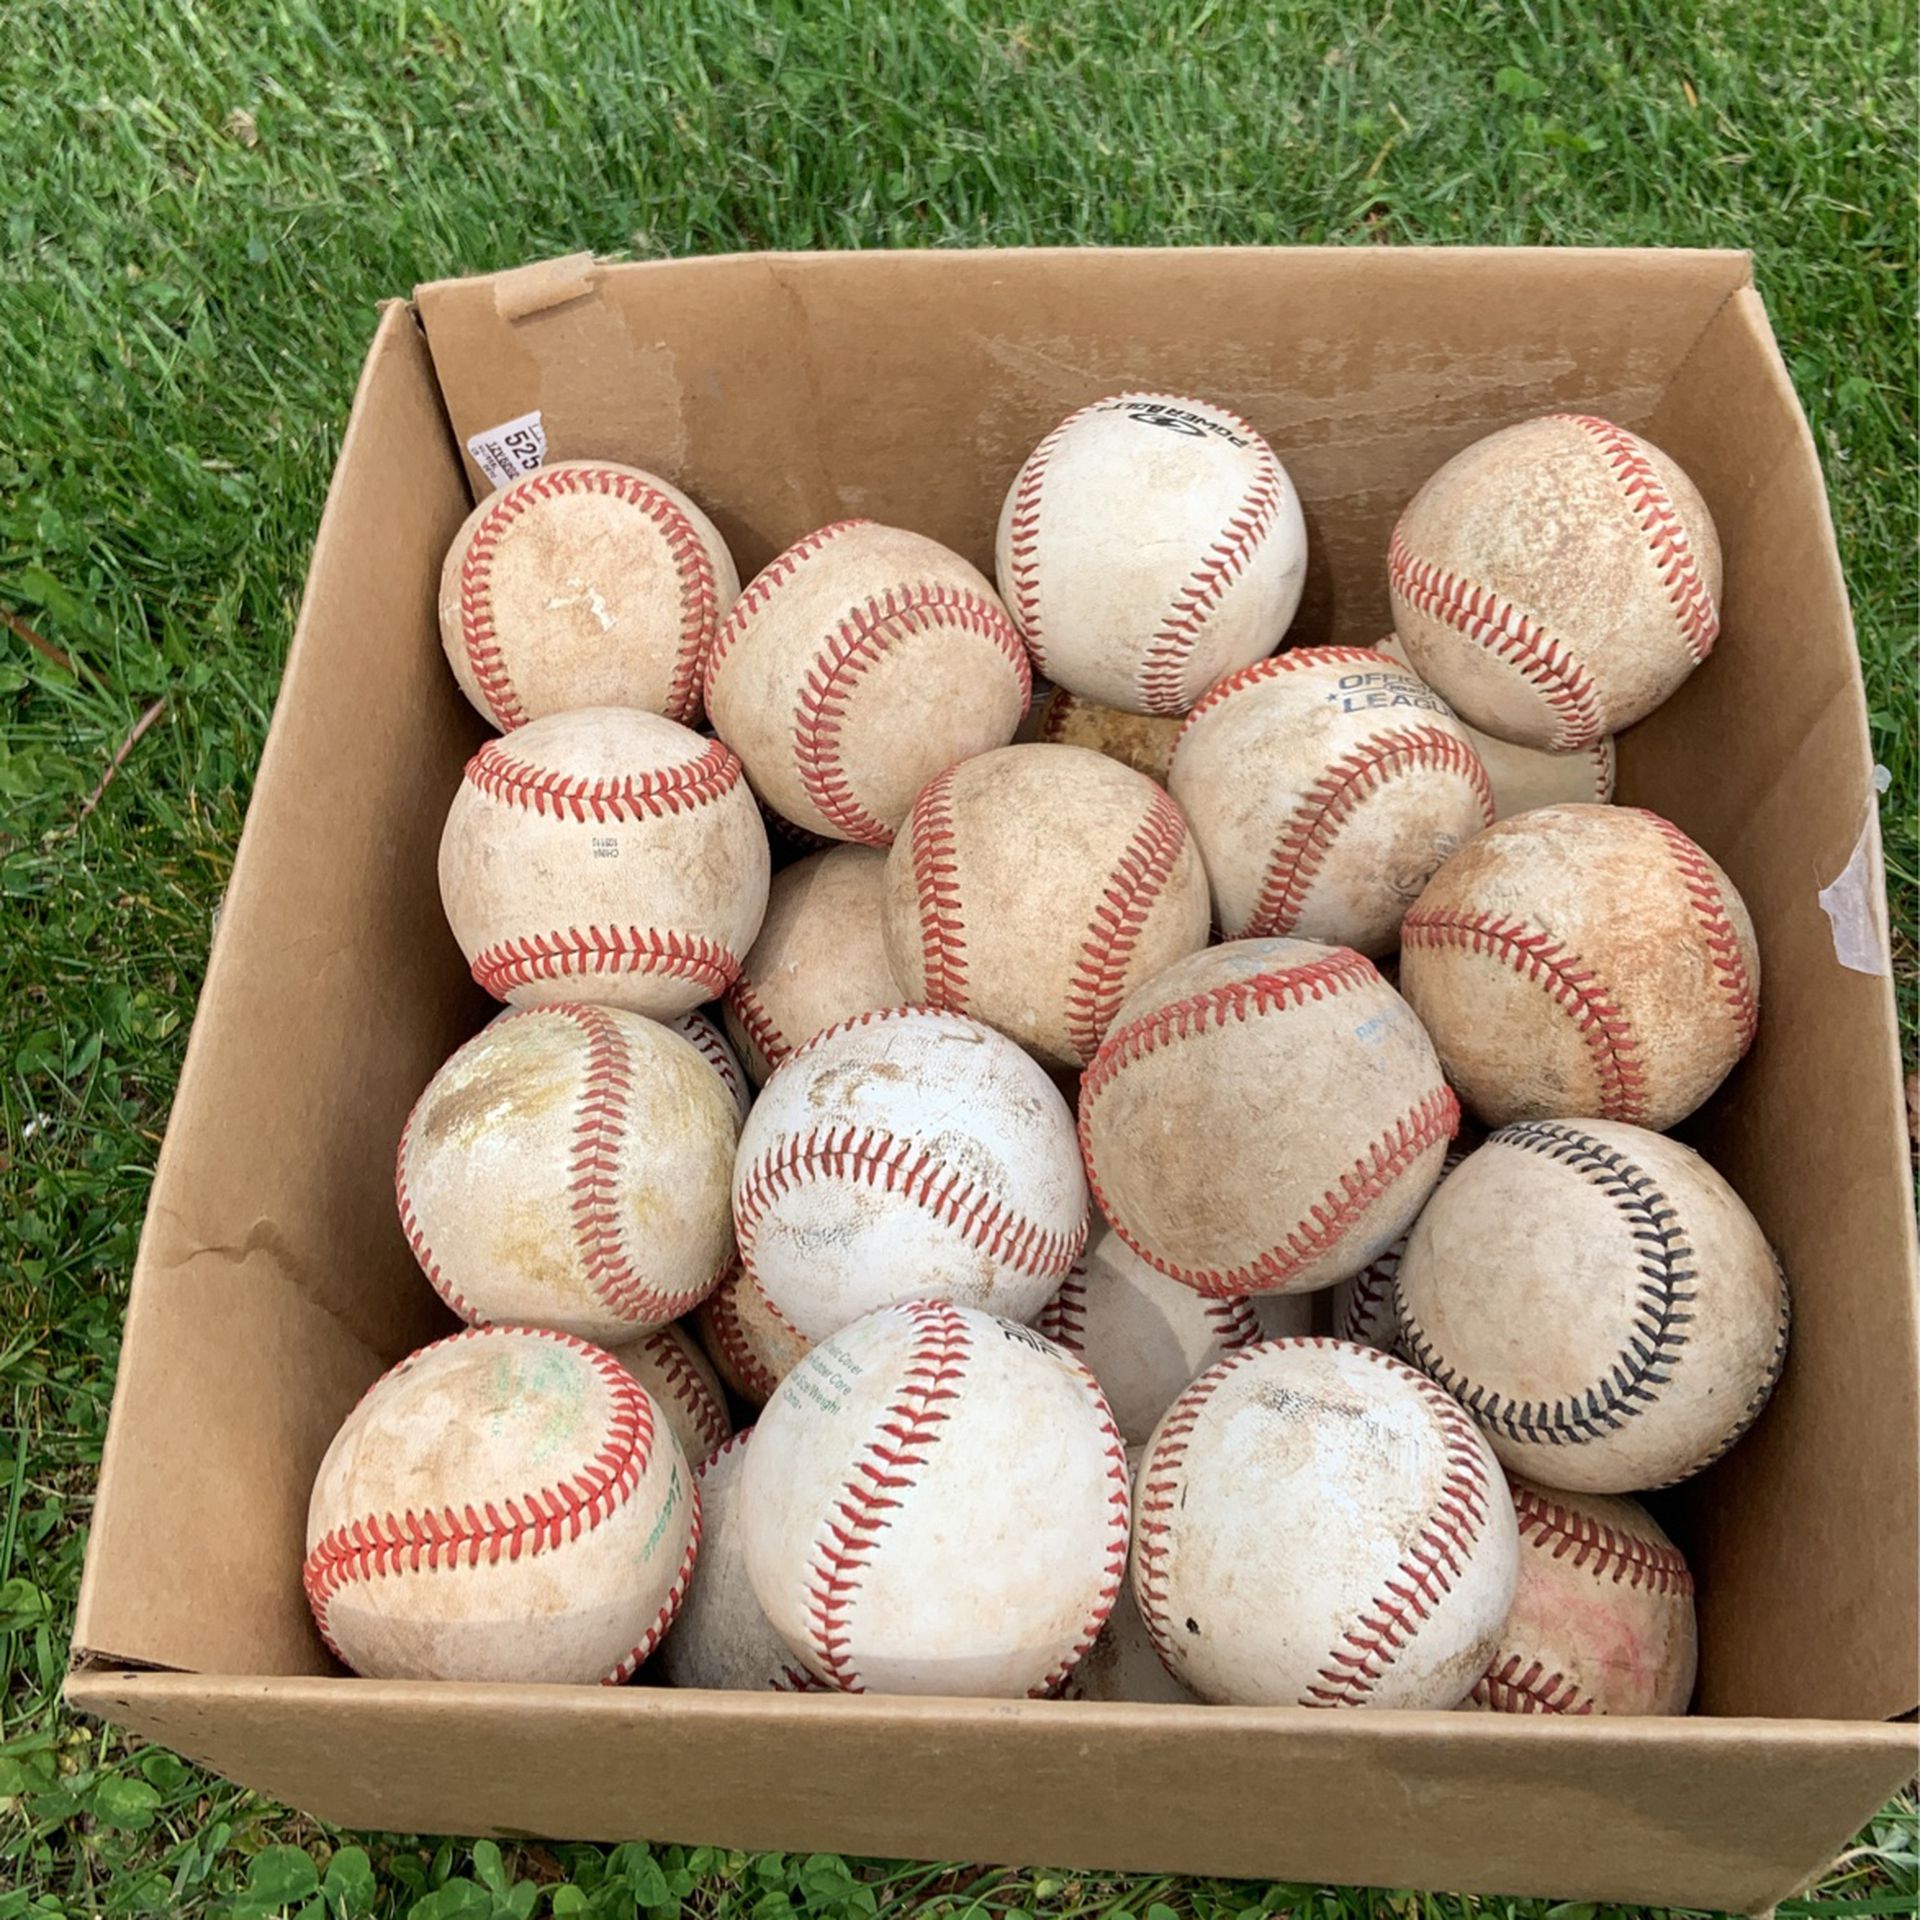 30 baseballs, Used, Great For Batting Practice